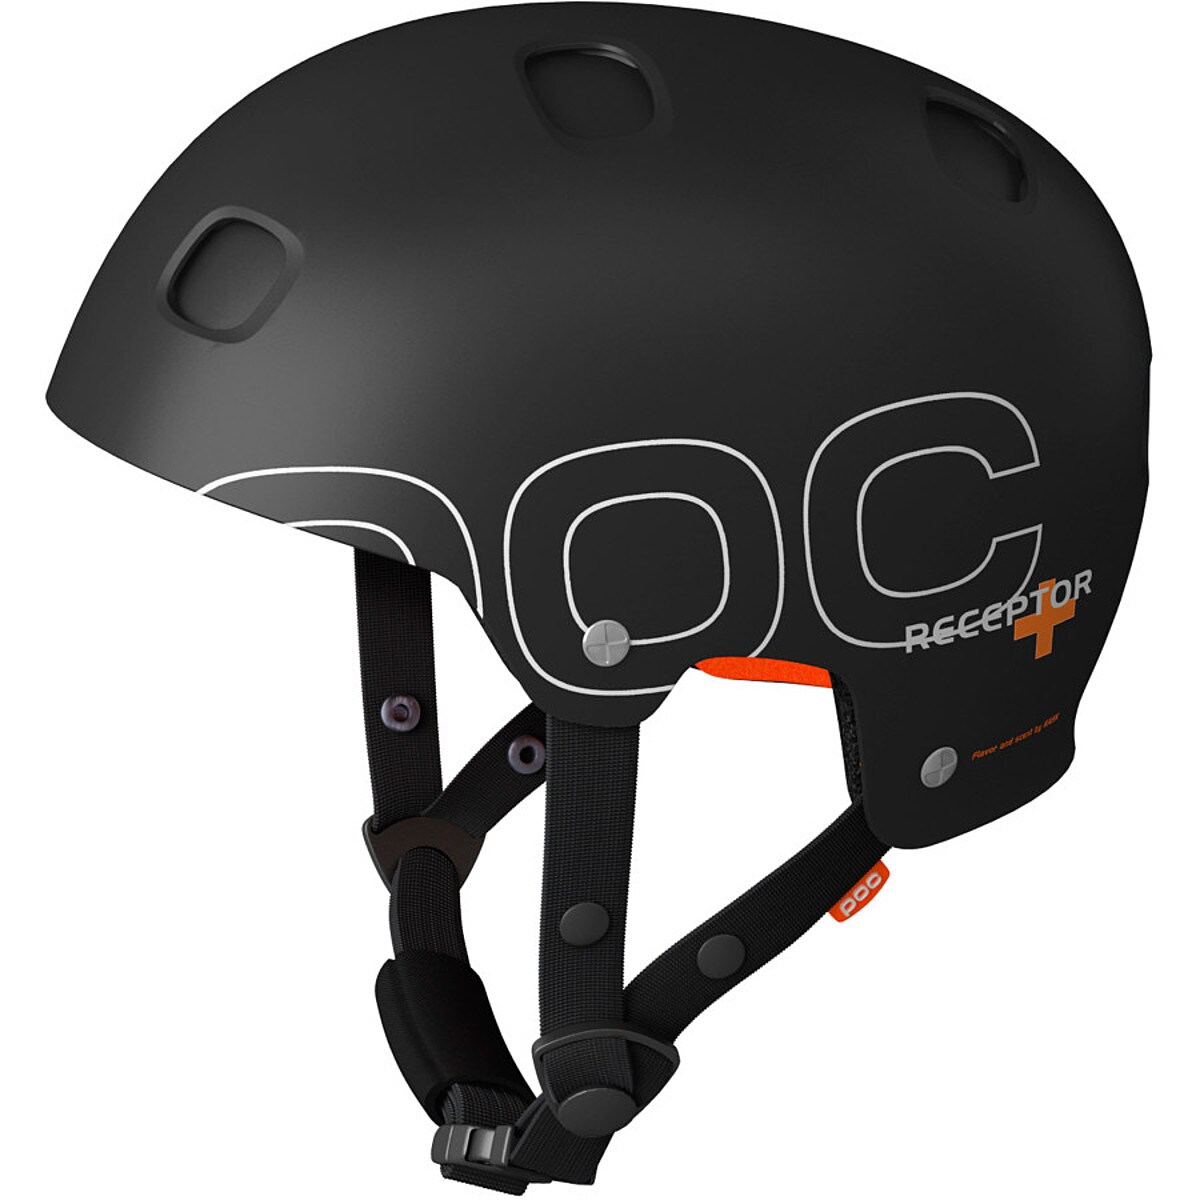 POC Receptor Bike Helmet